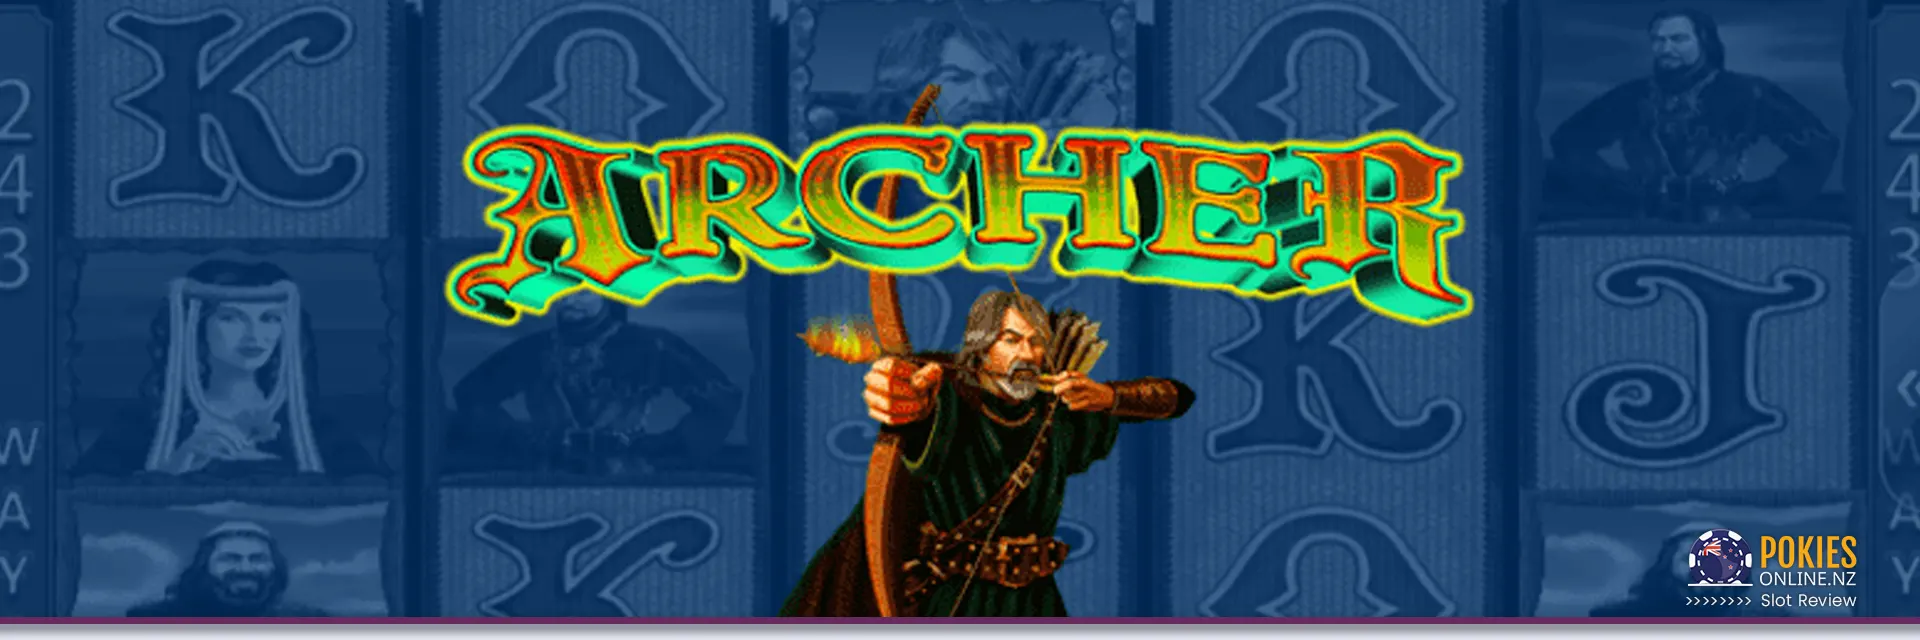 Archer slot Banner